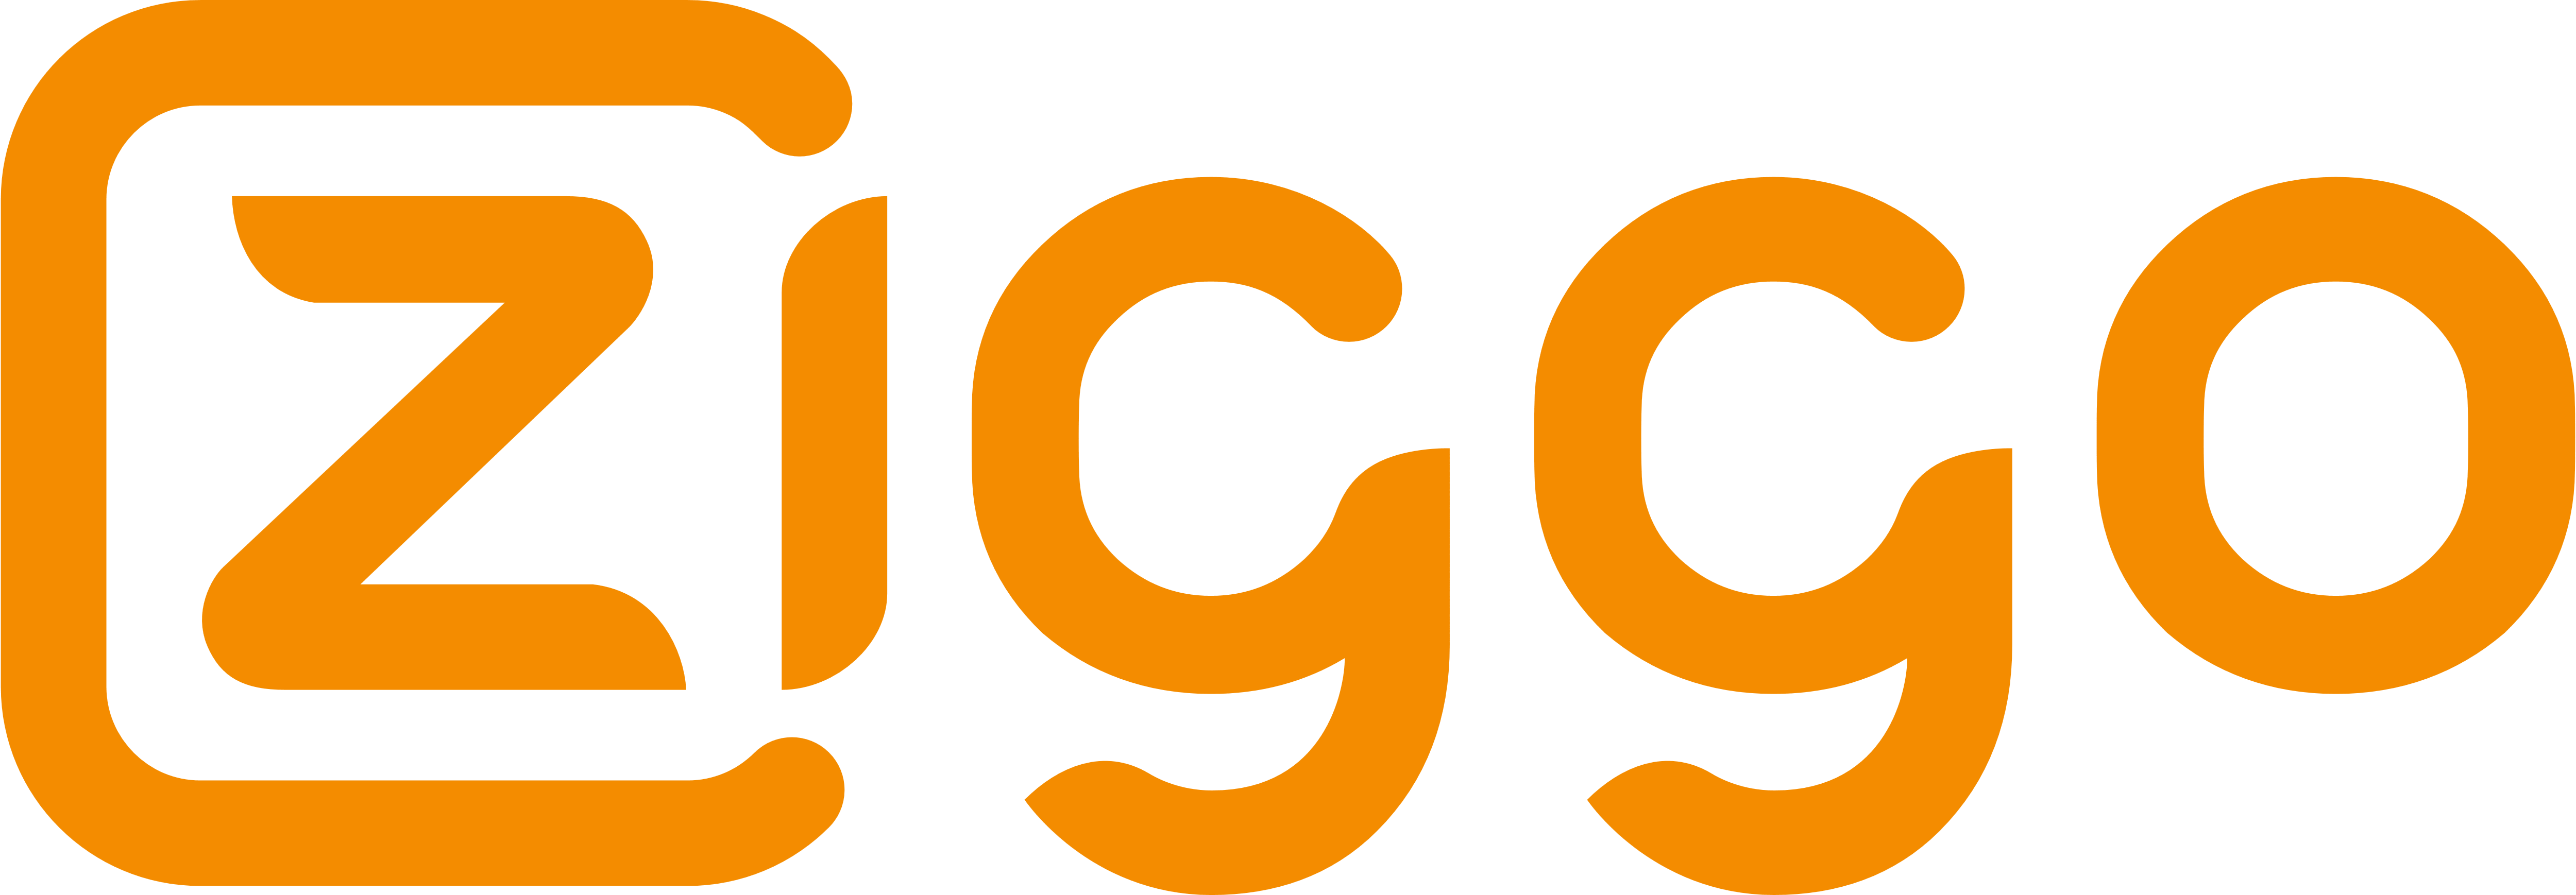 Ziggo Logos Download Philadelphia Eagles Logo Clip - Ziggo Logos Download Philadelphia Eagles Logo Clip (5000x1738)